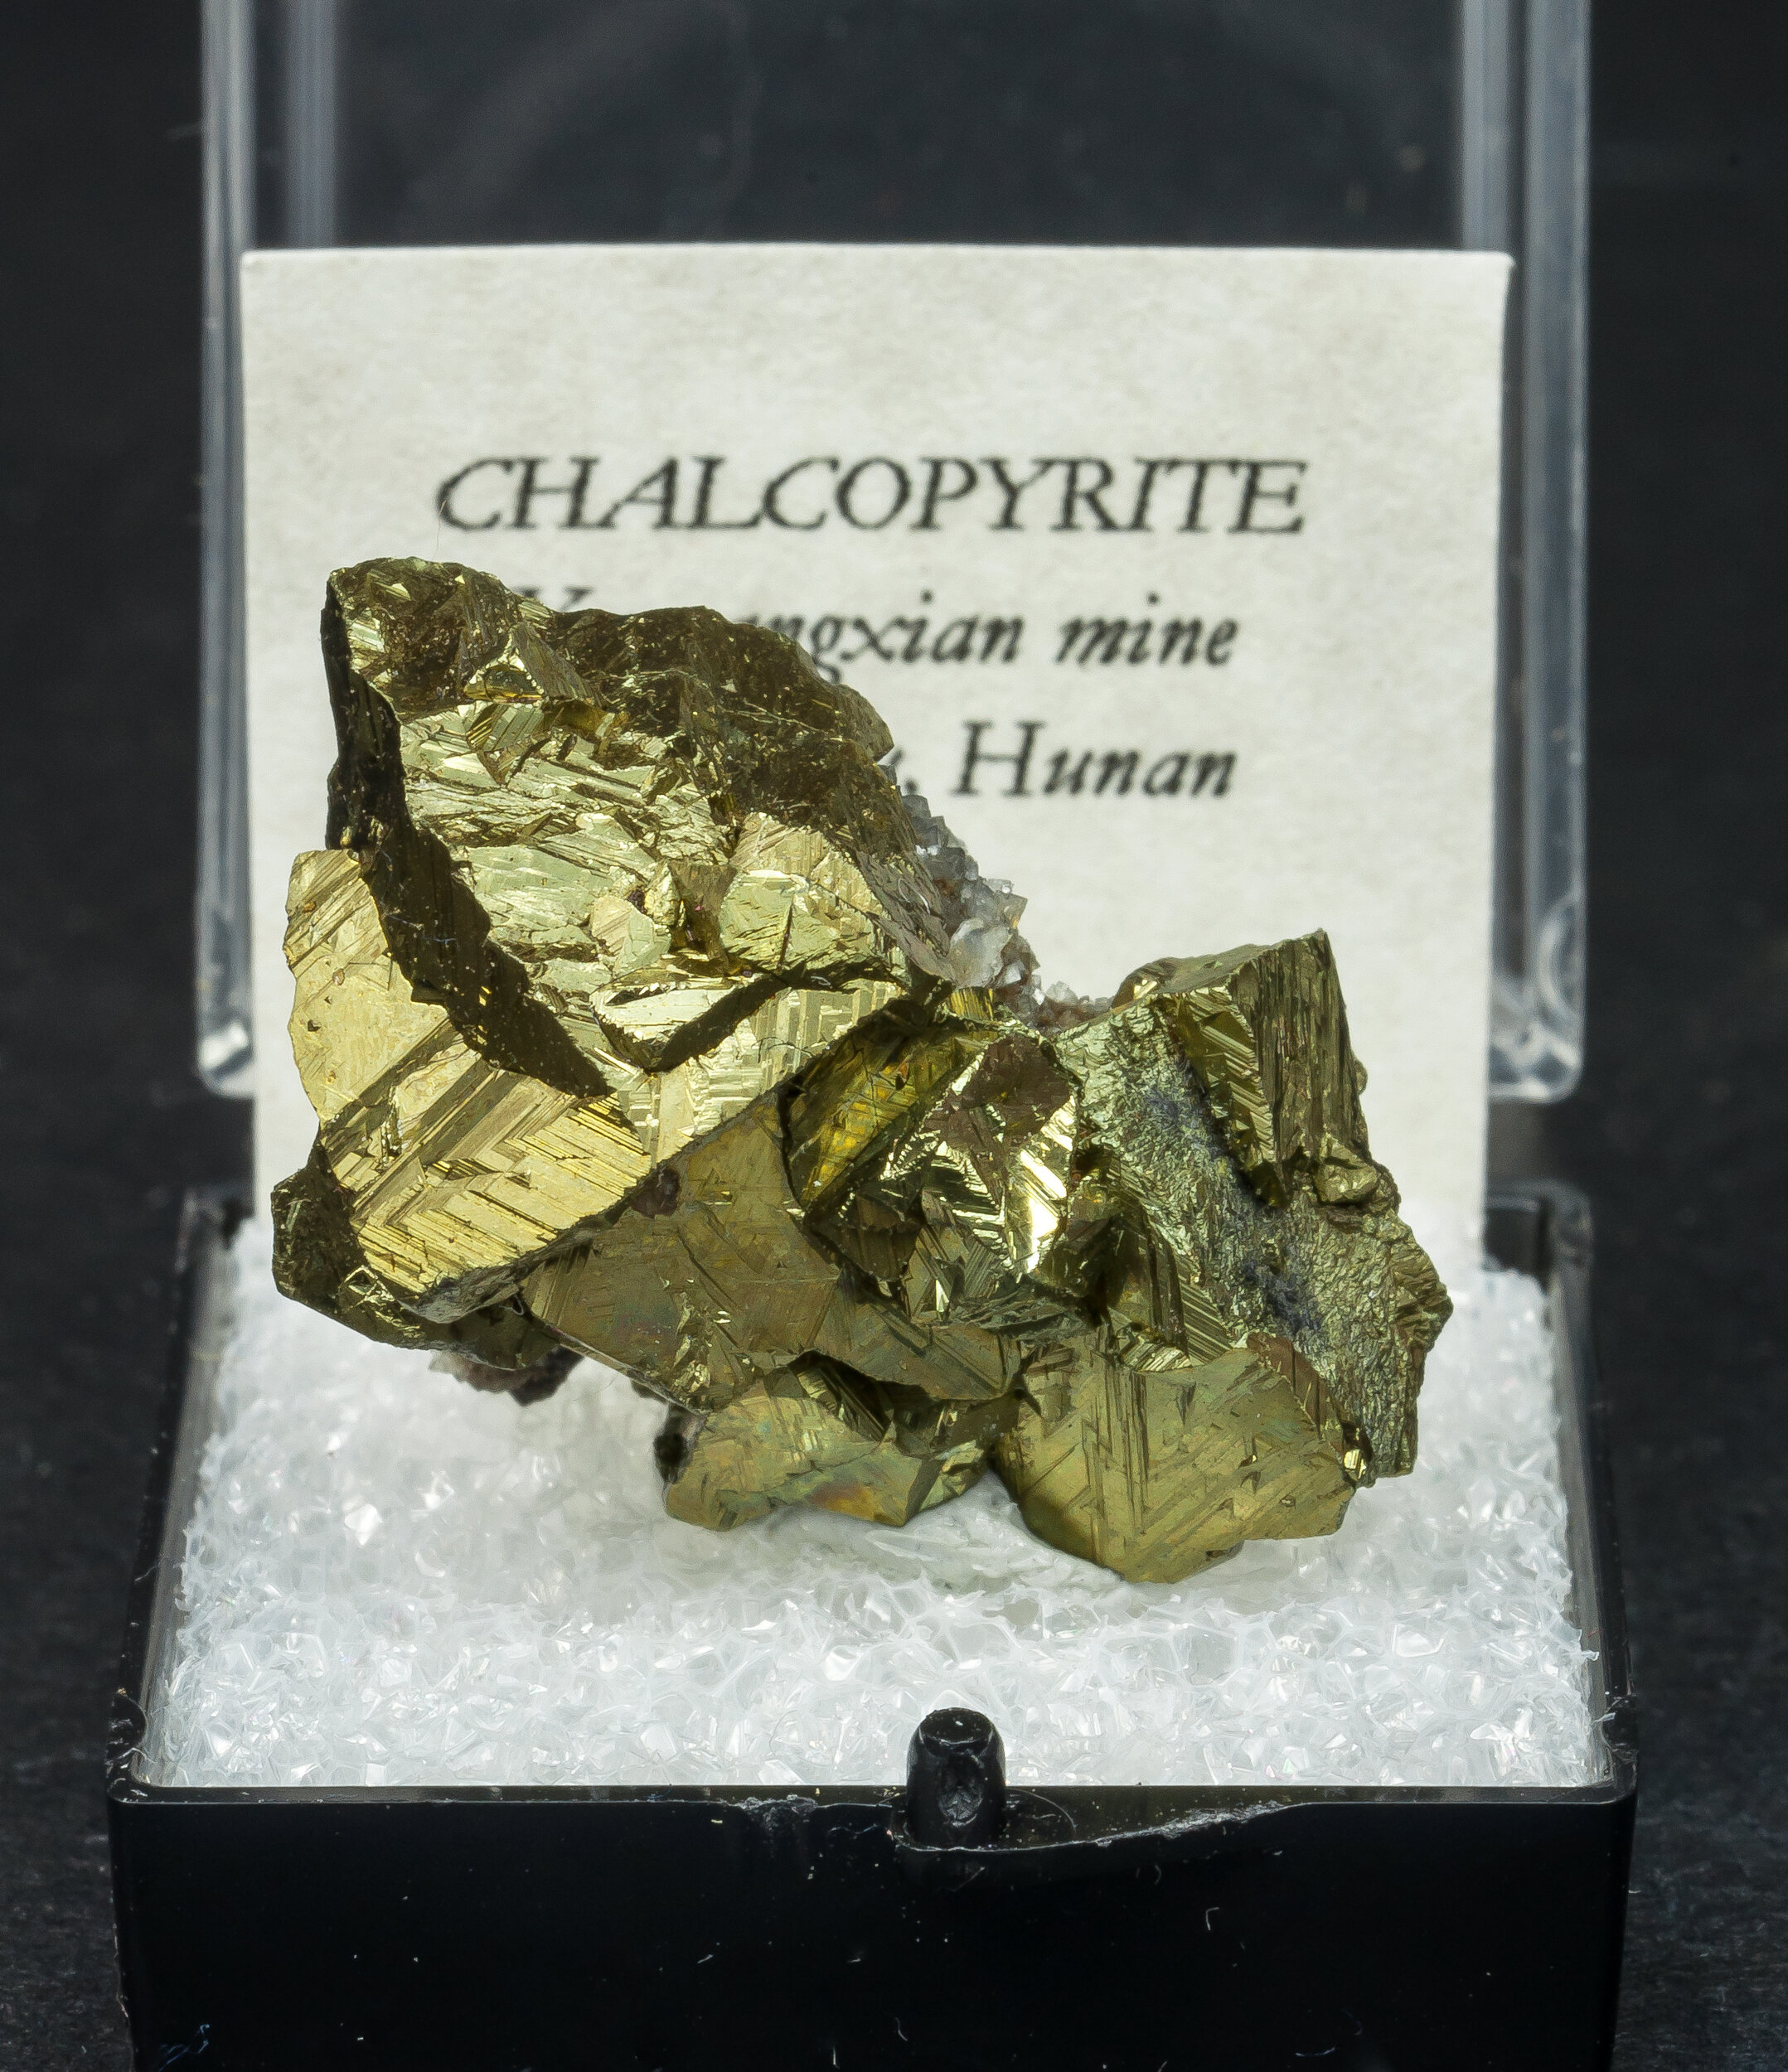 specimens/s_imagesAO3/Chalcopyrite-TAY36AO3f.jpg